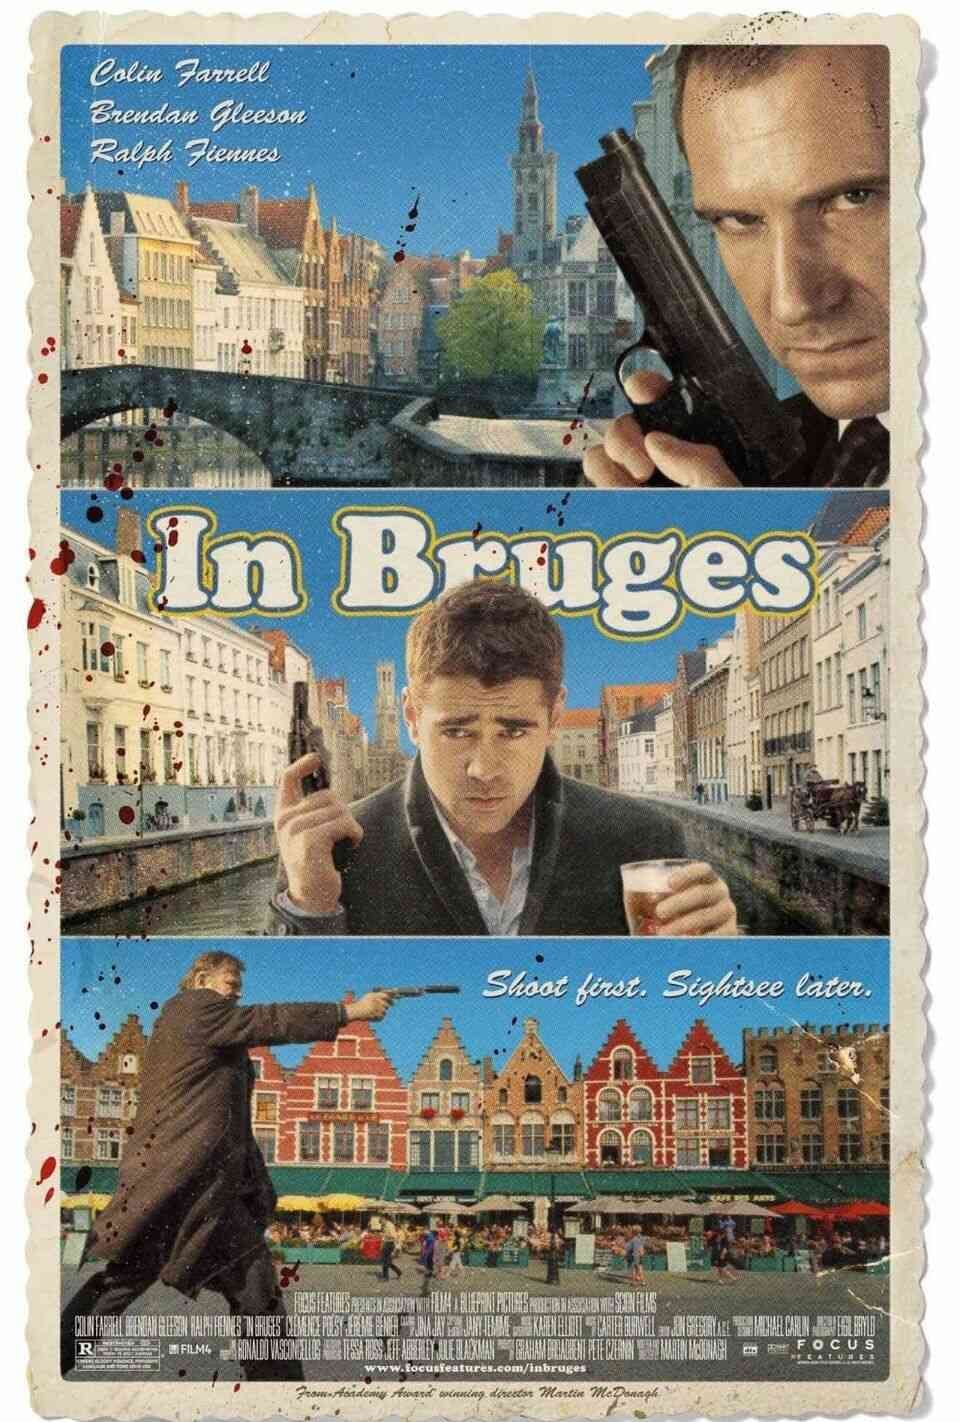 Read In Bruges screenplay.